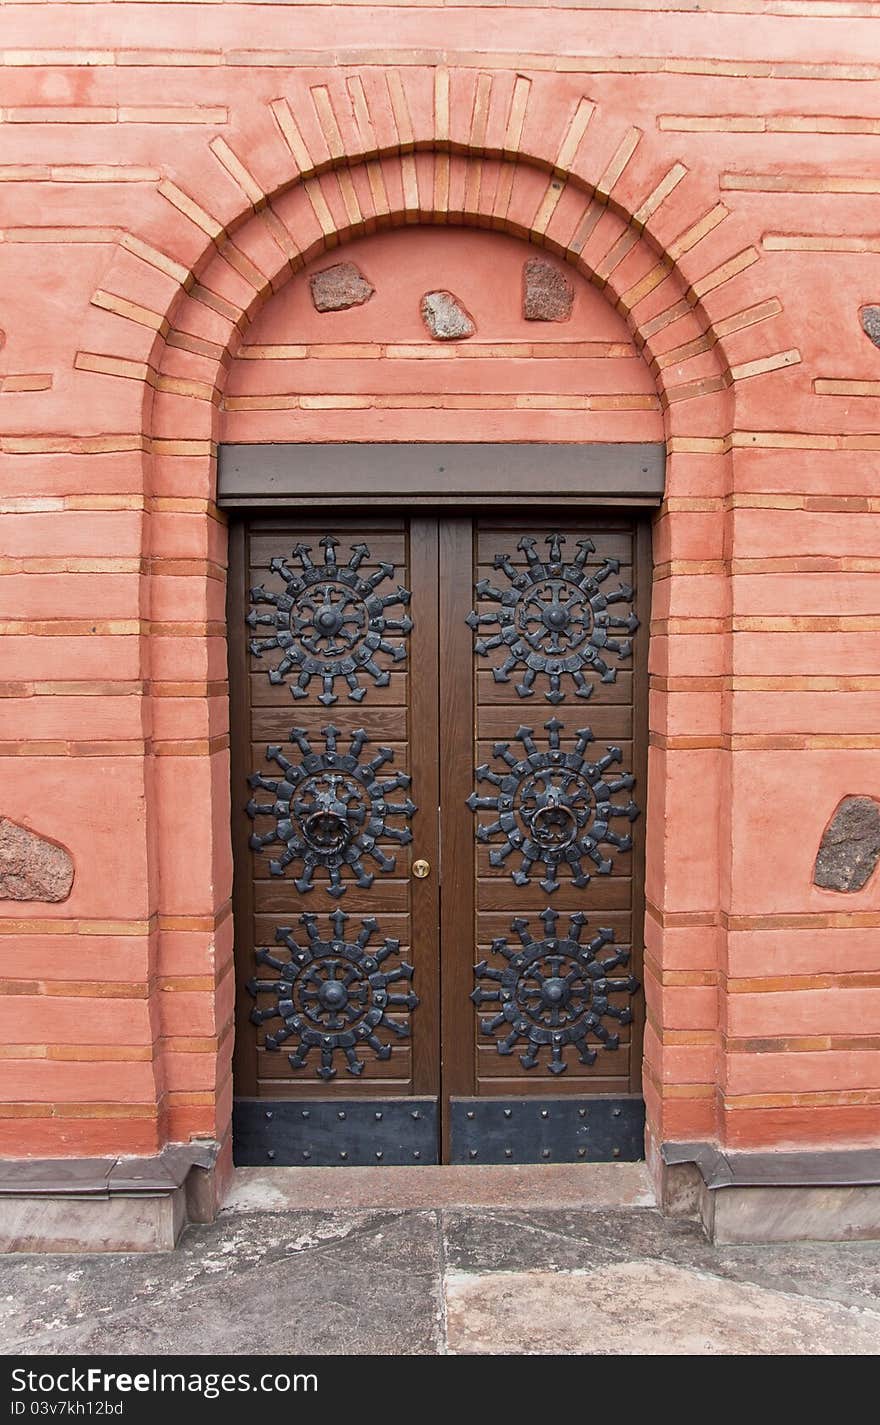 Ornamented wood ancient door. Old decoration of metal of the door of Gold Gate monument in Kyiv. Ukrainian landmark.